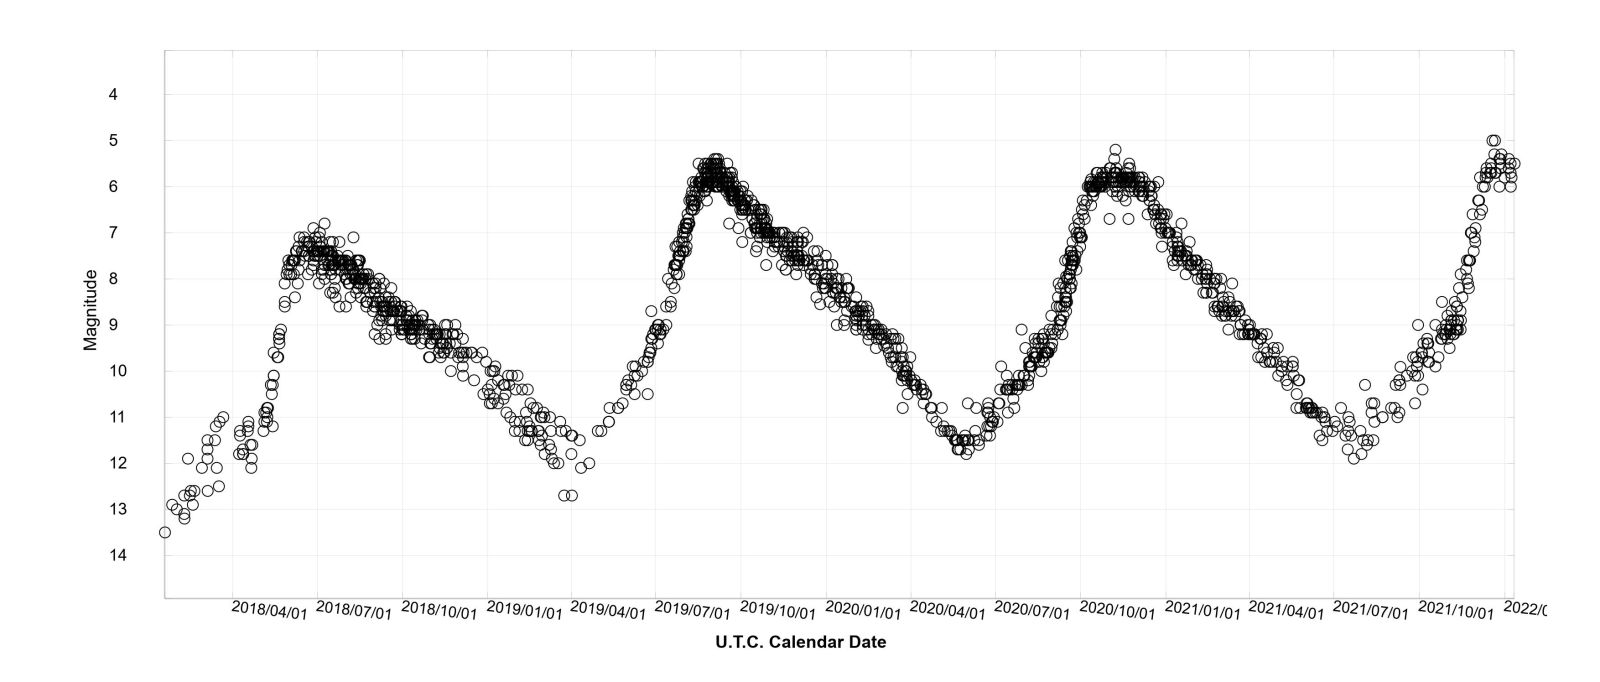 R cas光变曲线图。图片来源：美国变星观测者协会。